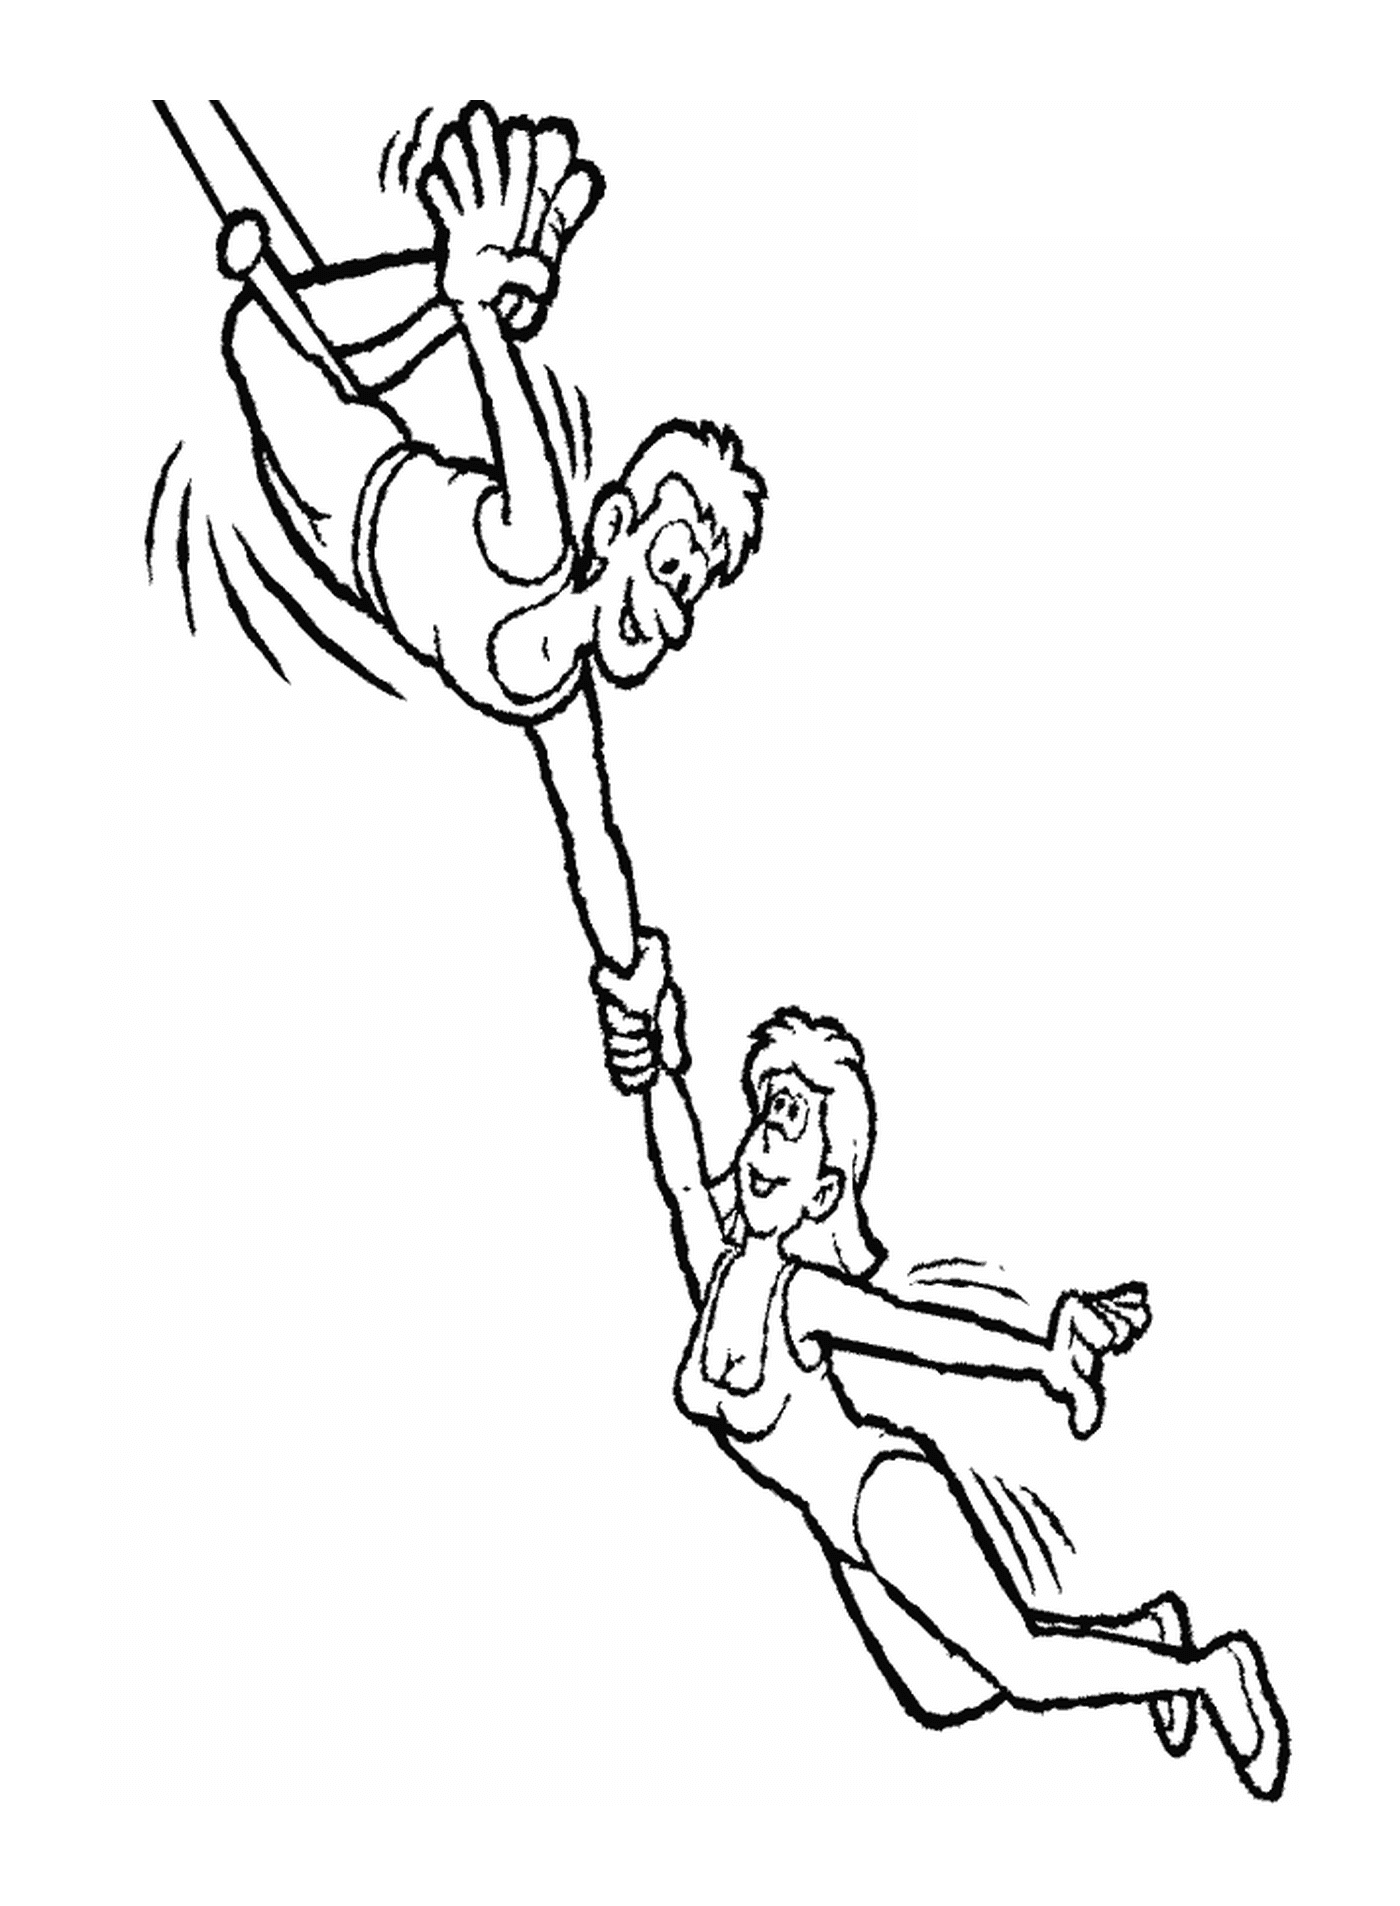  A male and a female trapezist 